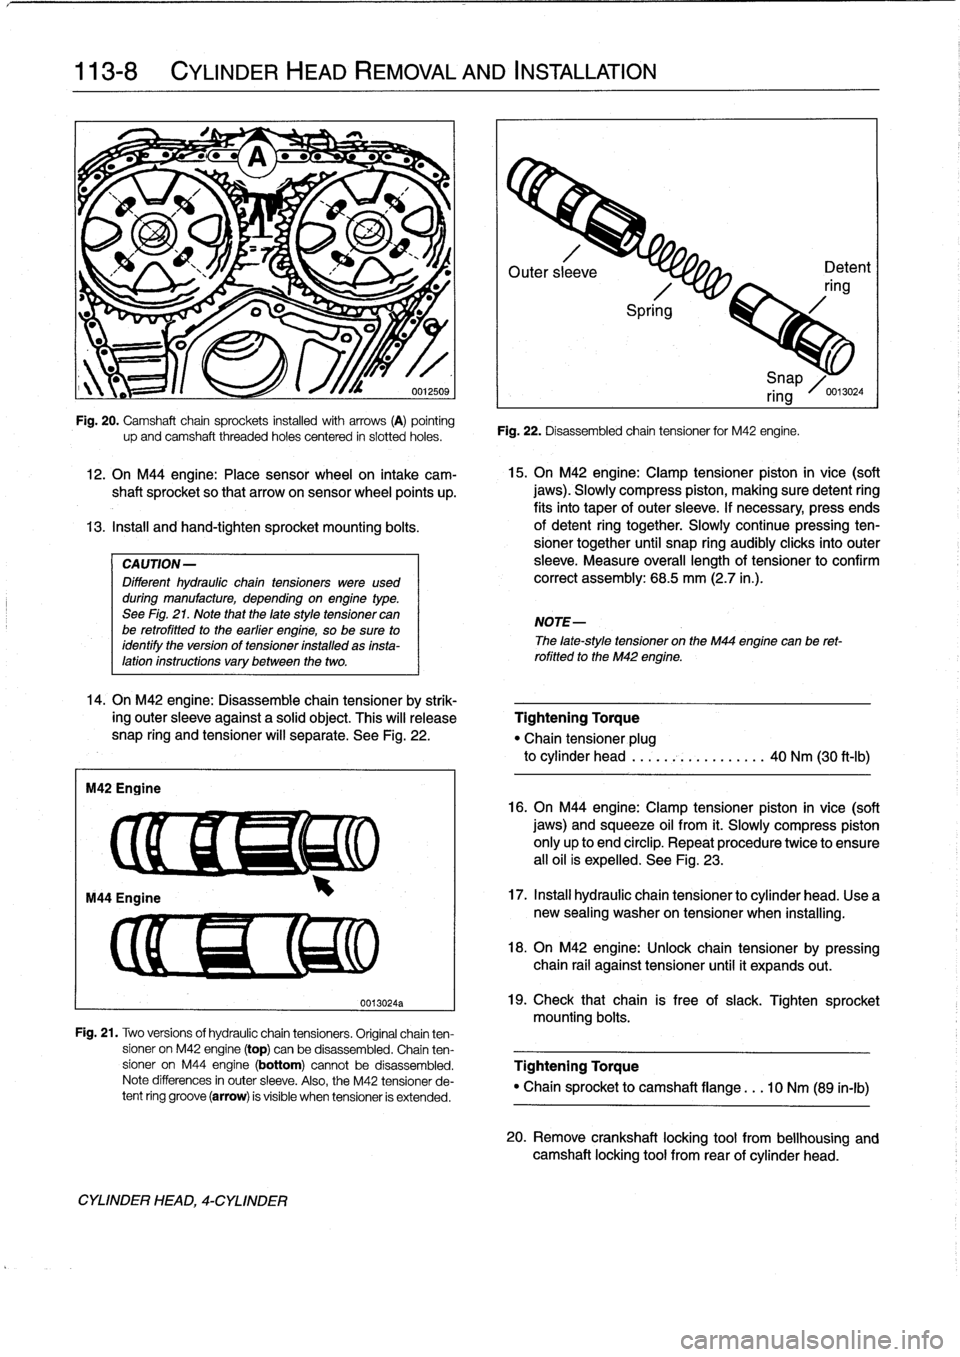 BMW 325i 1994 E36 Workshop Manual 
113-8

	

CYLINDER
HEAD
REMOVAL
AND
INSTALLATION

IW?
-
L
/~f
W

	

~
4r

"

-
"

	

;,s
1

12
.
On
M44
engine
:
Place
sensor
wheel
on
intake
cam-
shaft
sprocket
so
that
arrowon
sensor
wheel
points
